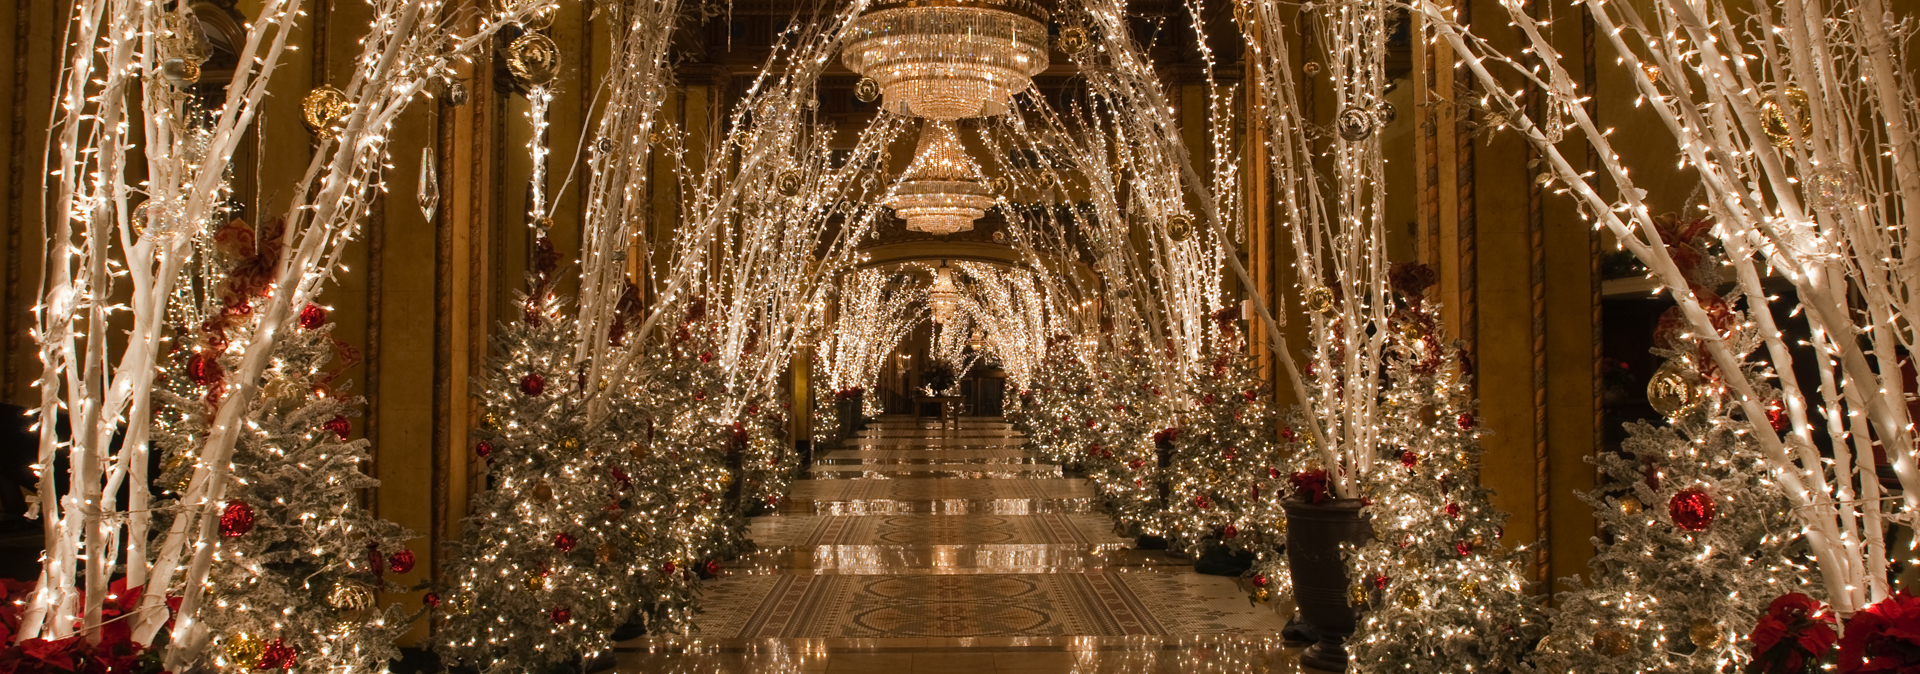 Hilton Holiday Decorations Bring the Magic This Season